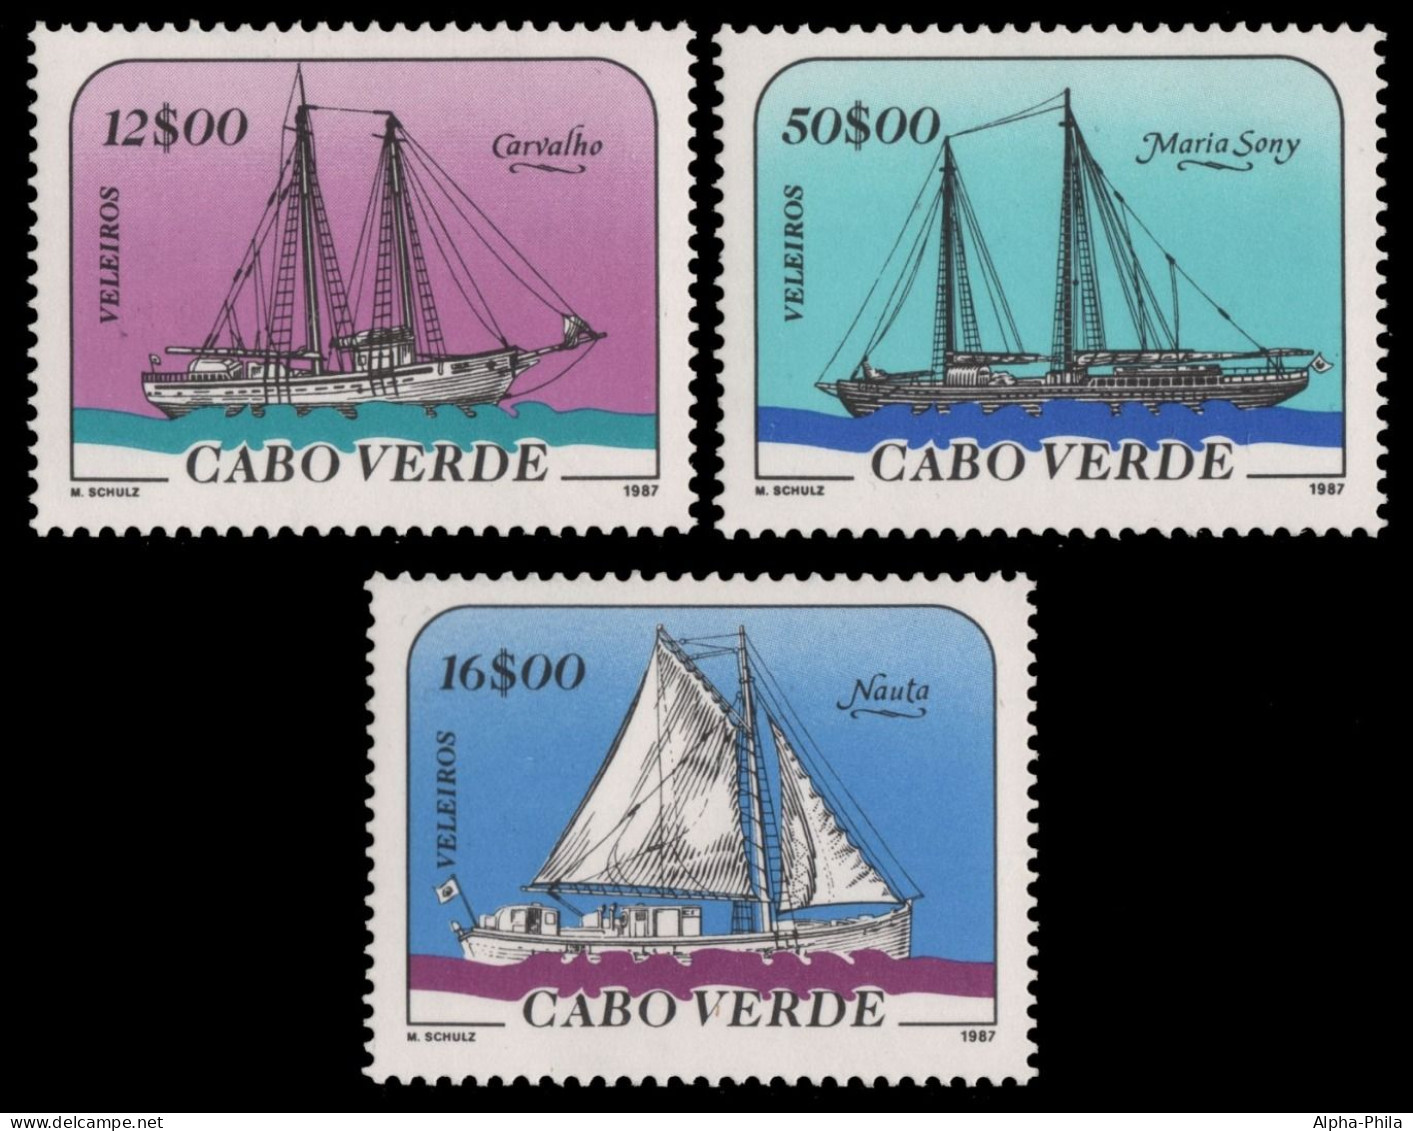 Kap Verde 1987 - Mi-Nr. 523-525 ** - MNH - Schiffe / Ships - Kap Verde